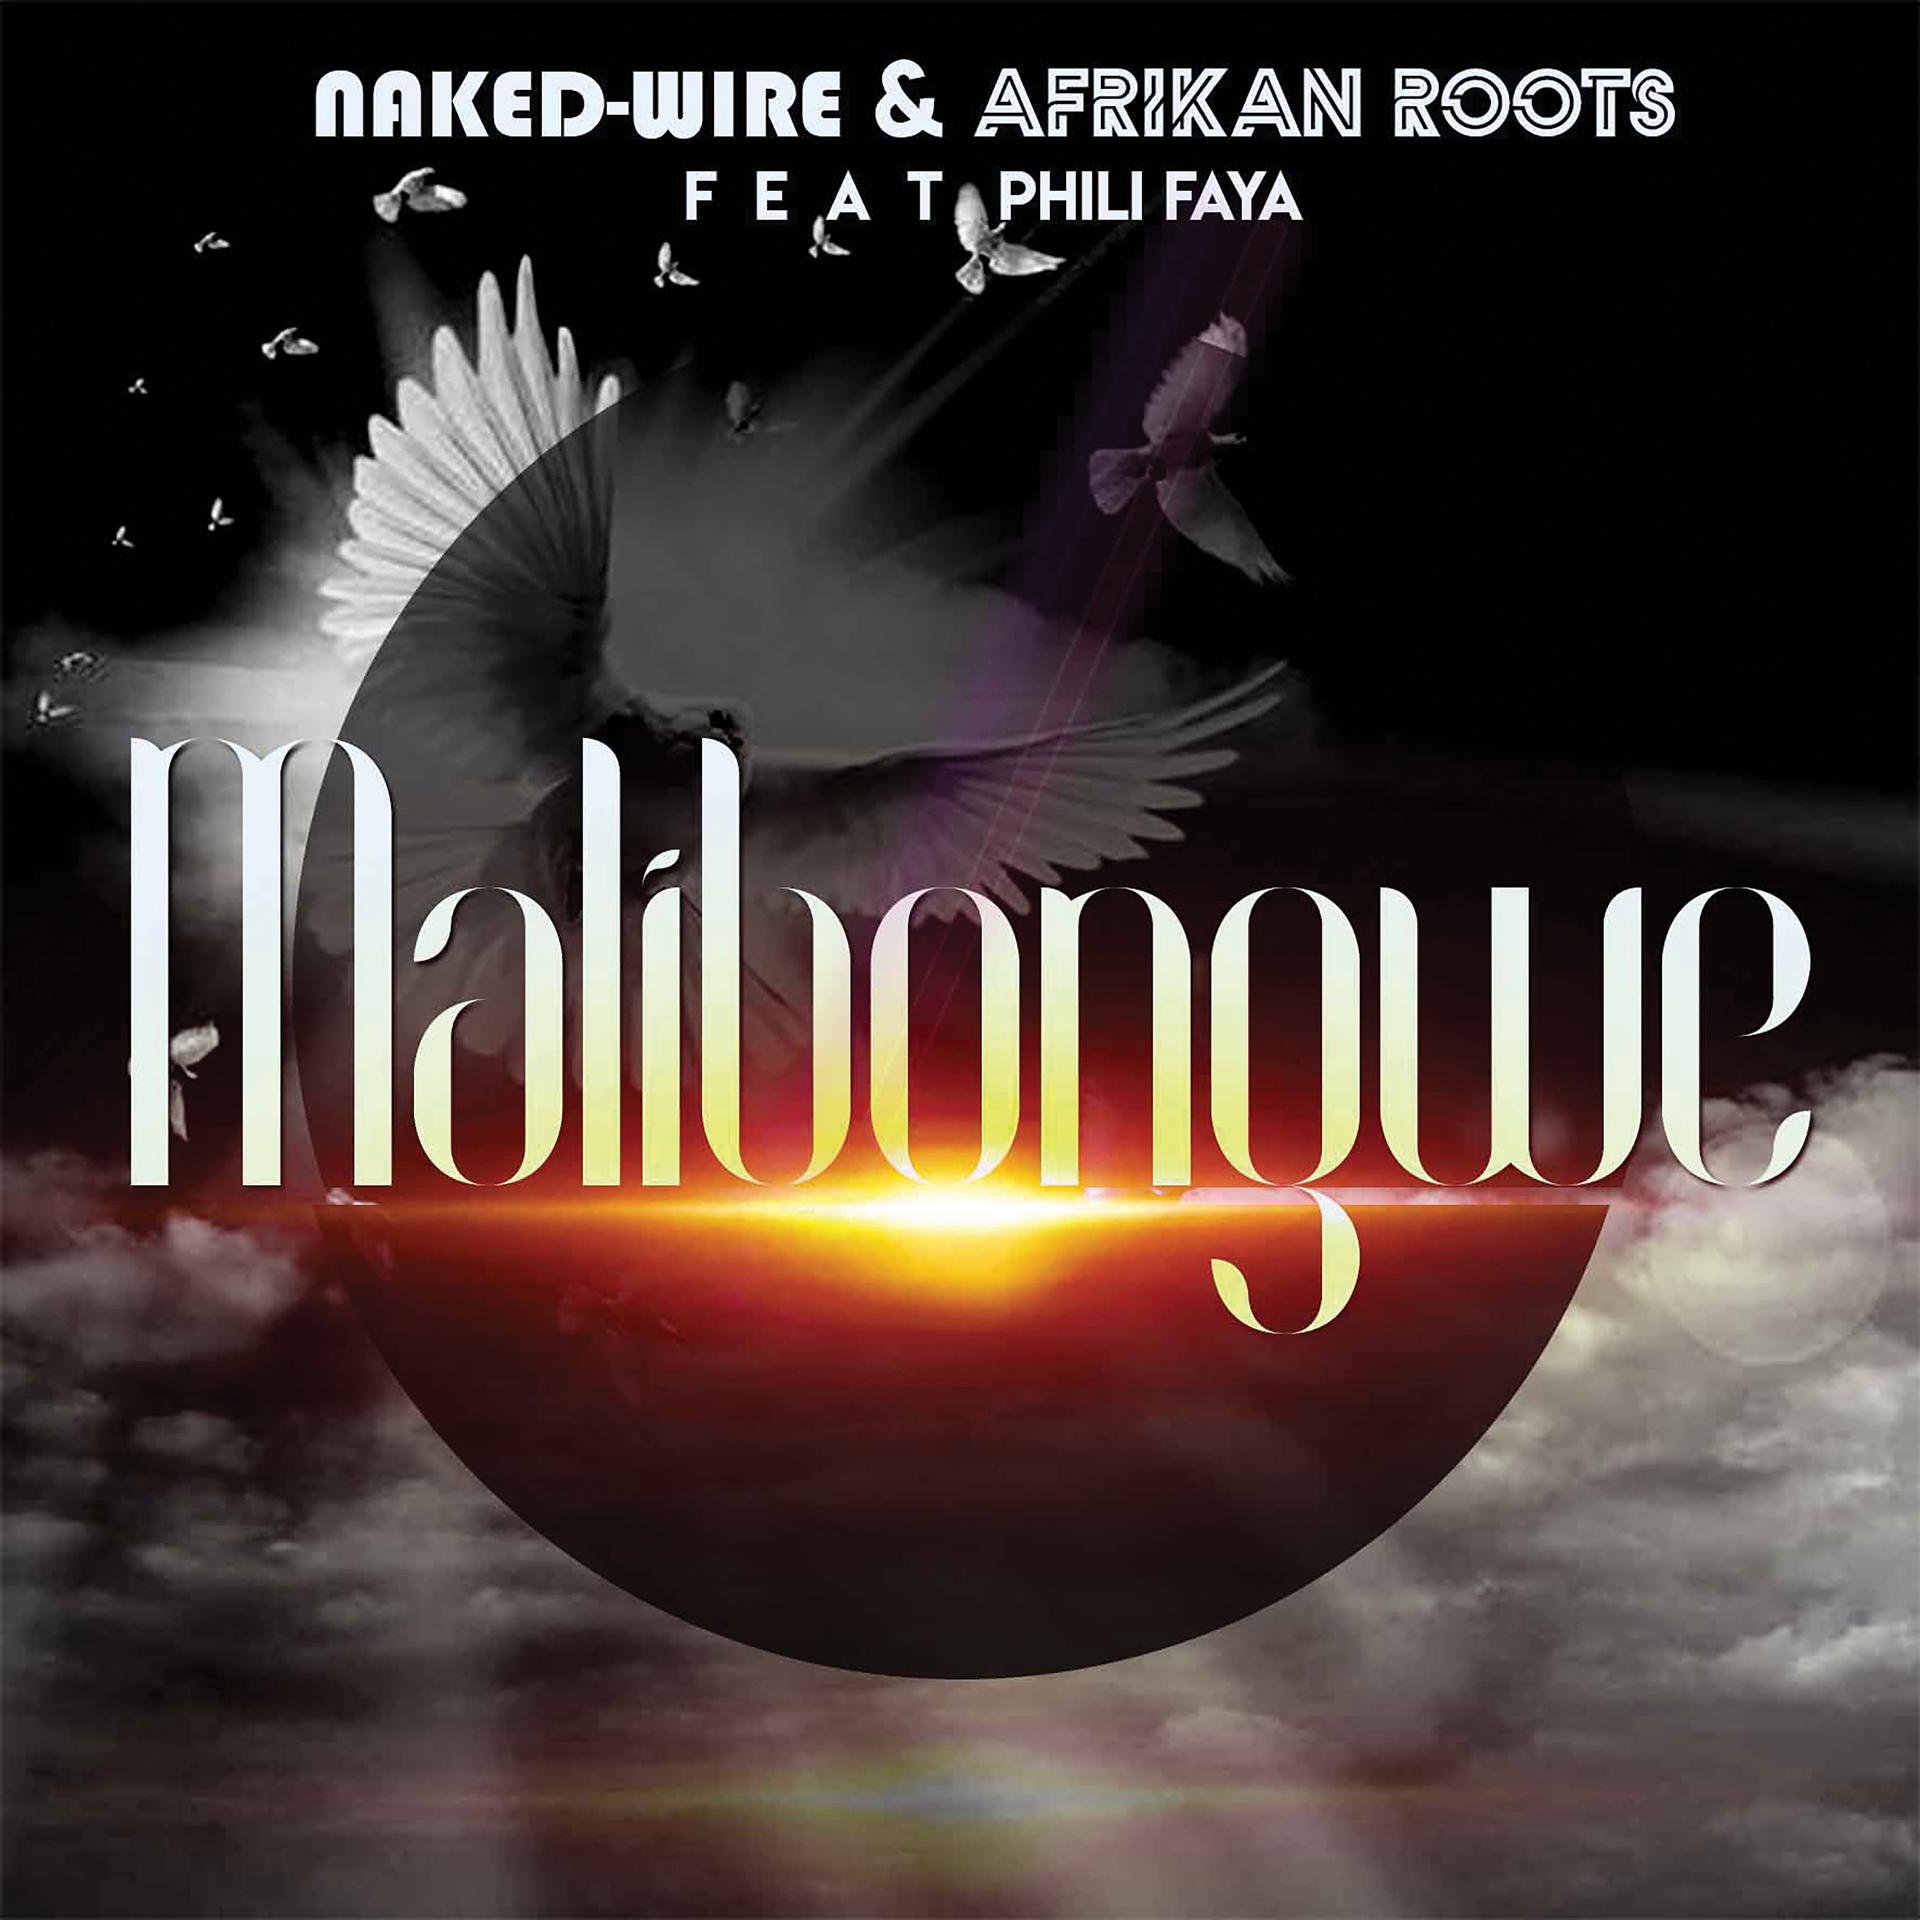 Постер альбома Malibongwe